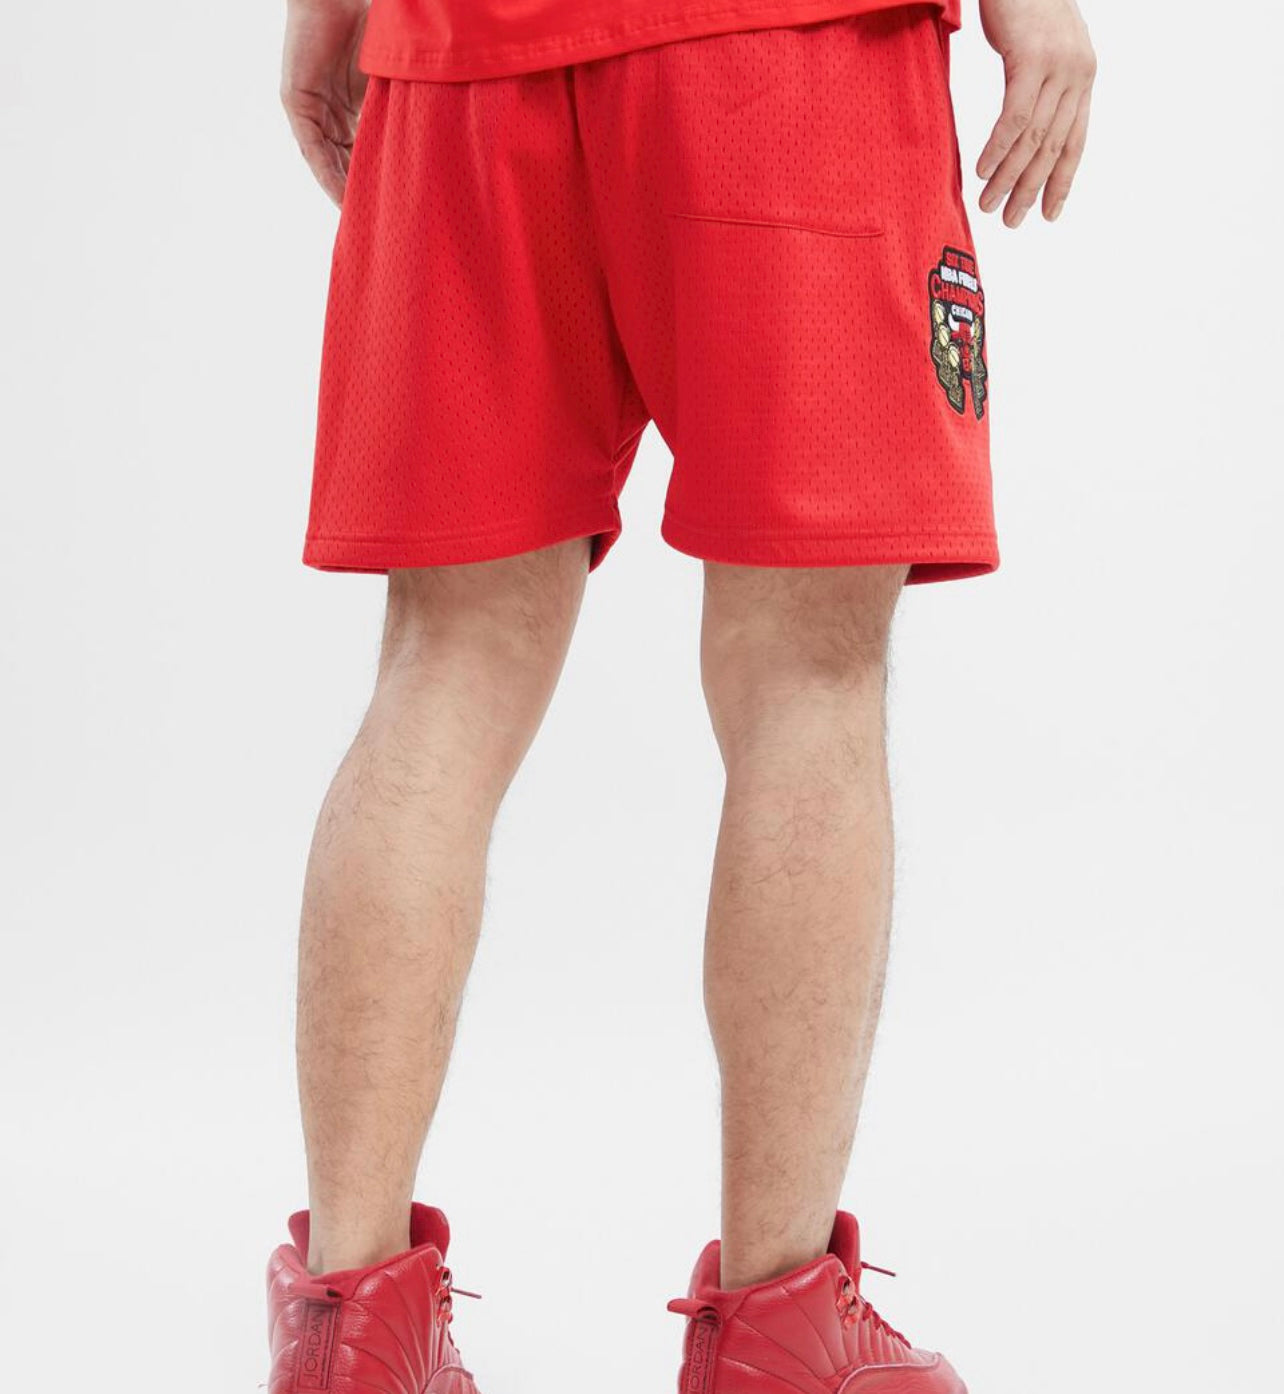 Chicago Bulls Mesh Shorts - Red - ShopperBoard